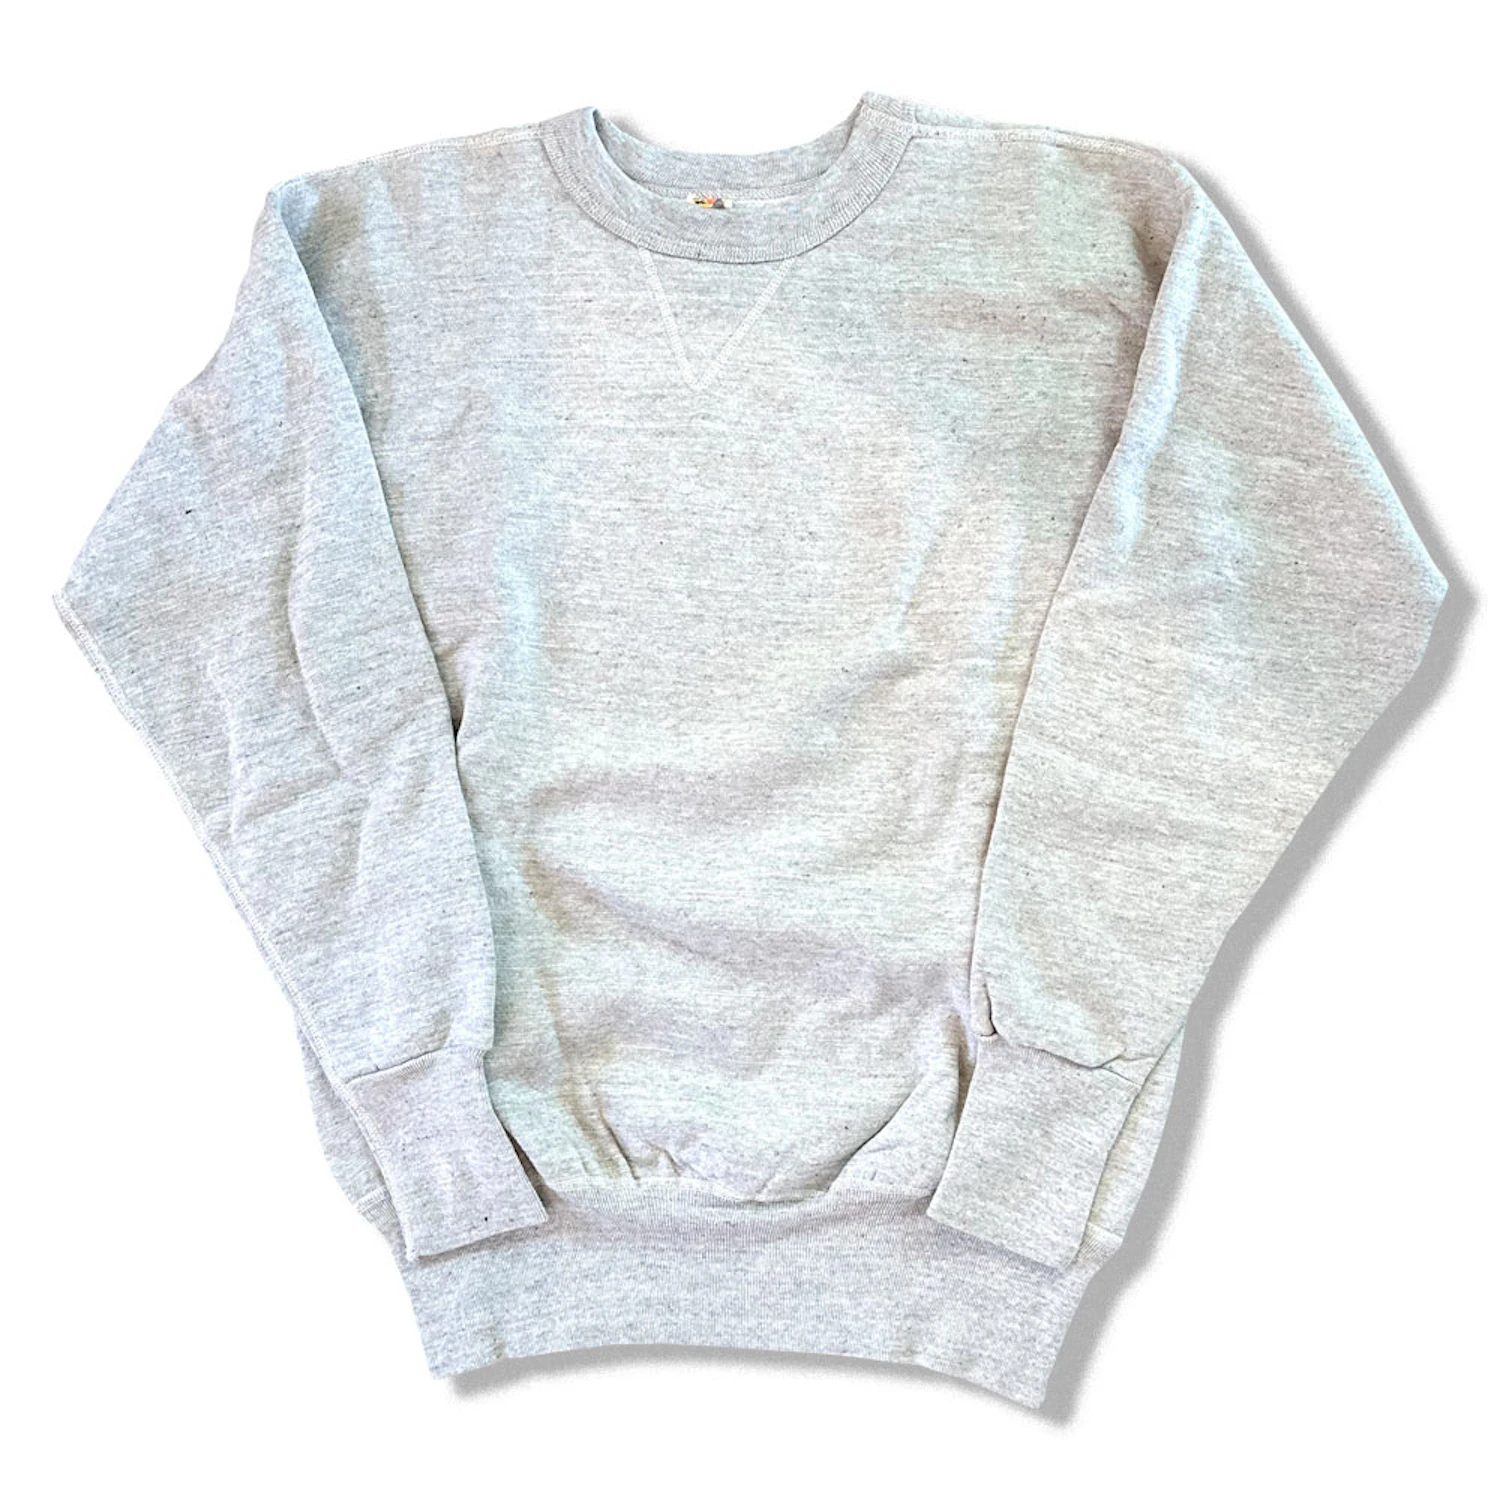 1950s Sweatshirts Preserved by FTL Japan